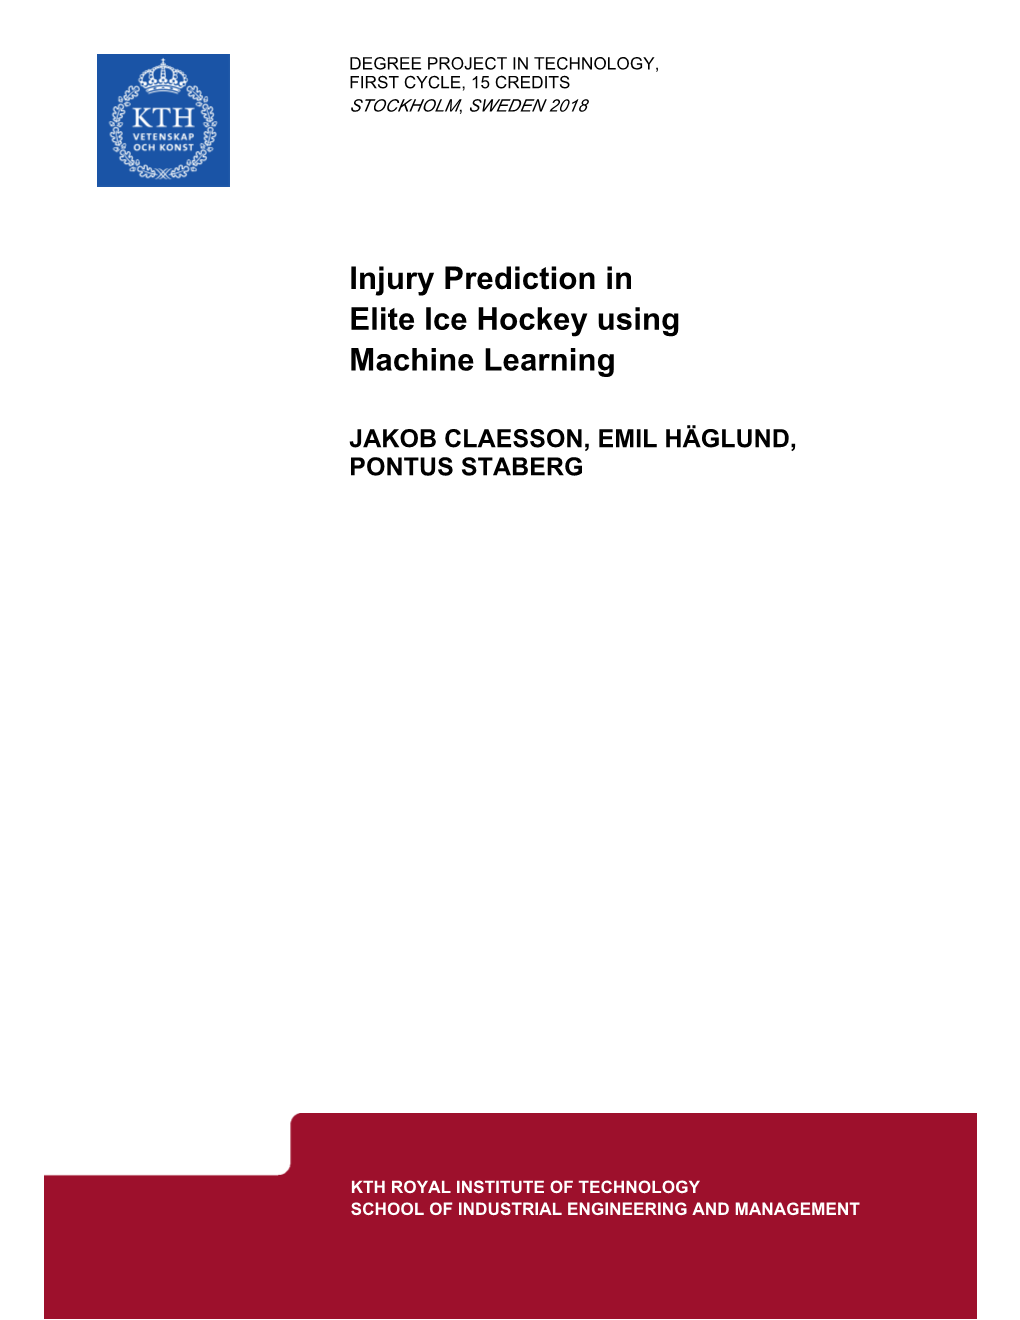 Injury Prediction in Elite Ice Hockey Using Machine Learning